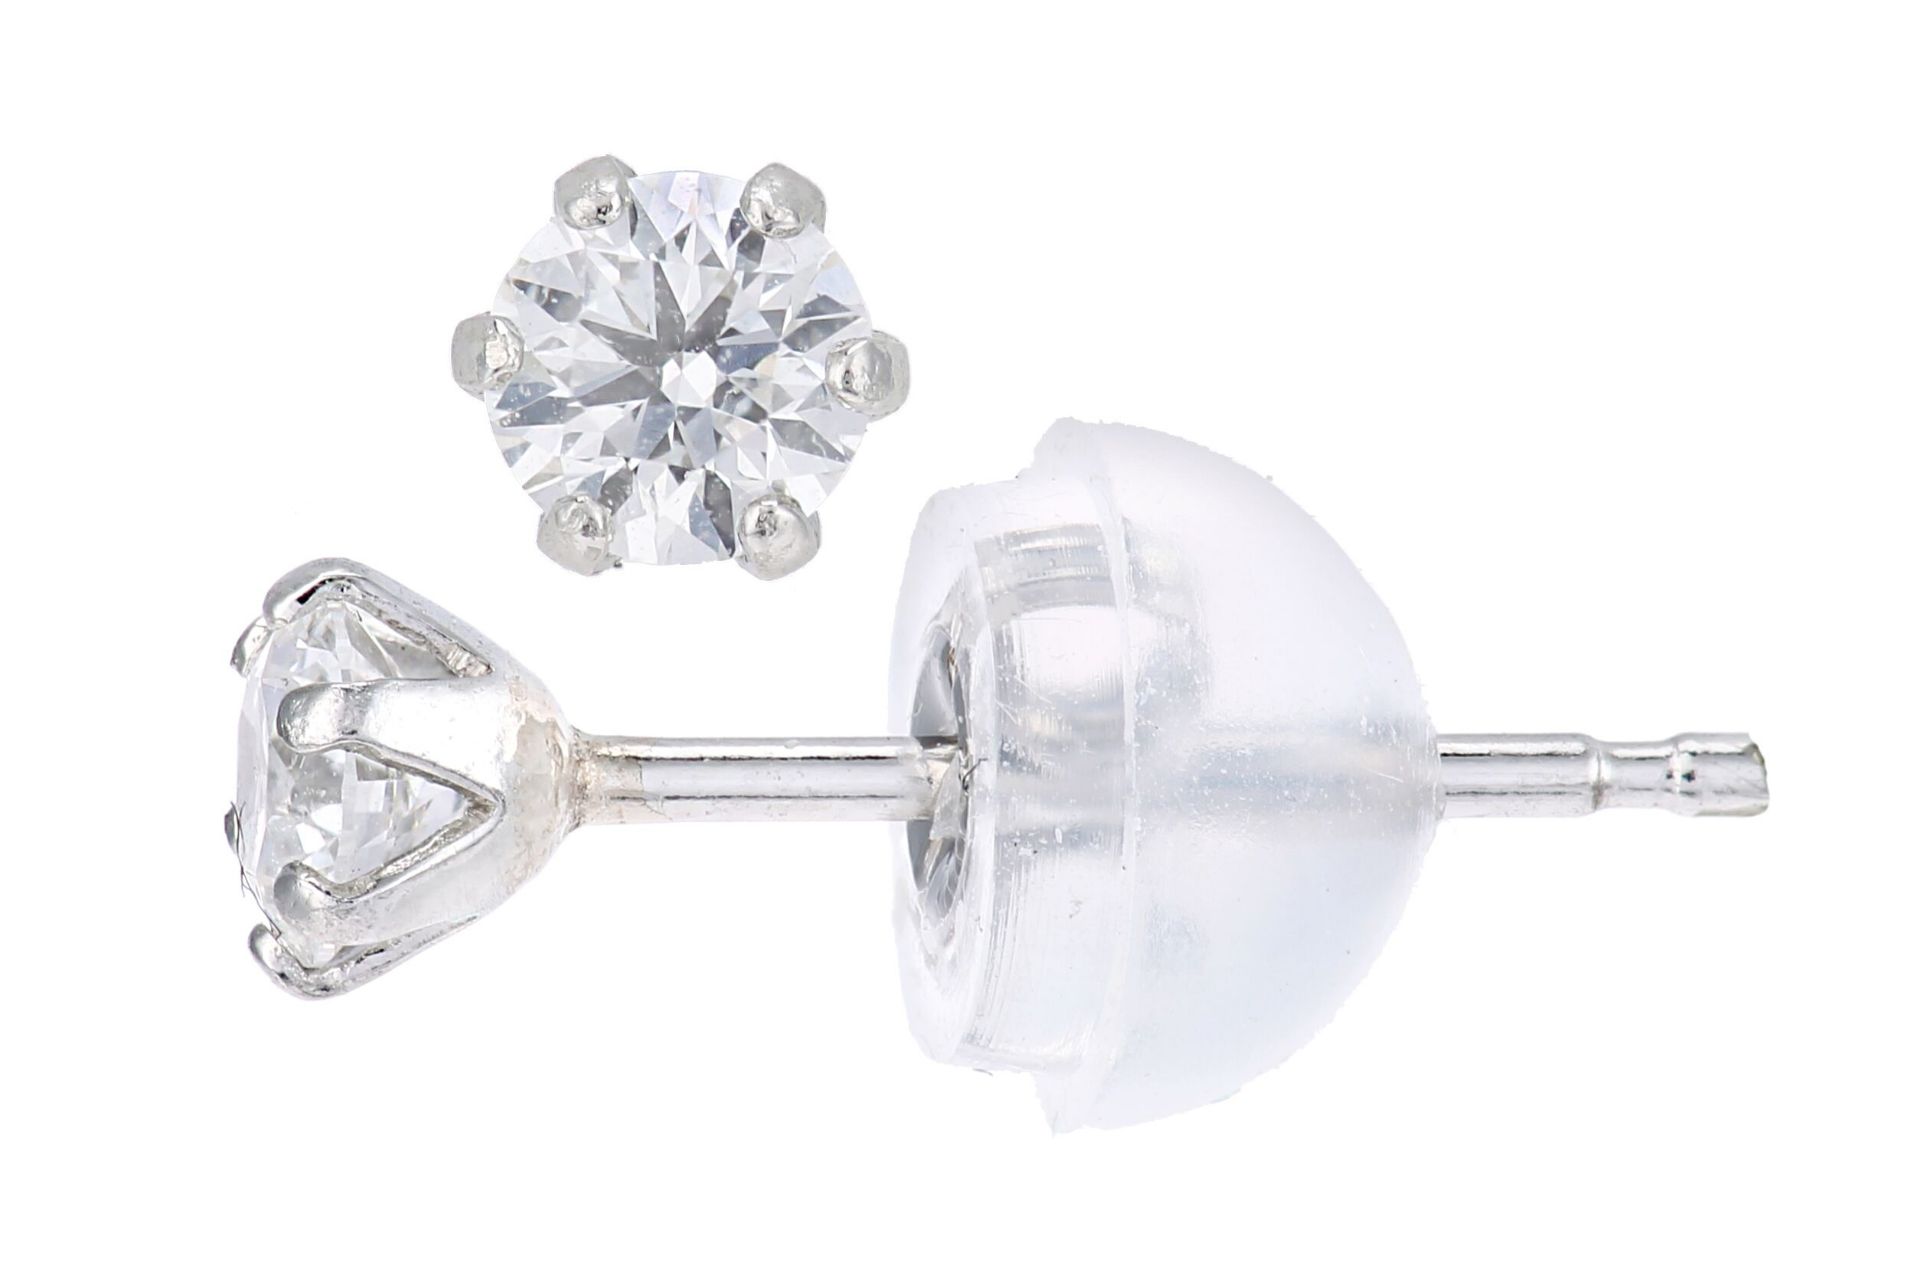 Platinum diamond earrings Metal Platinum 900, Weig - Image 2 of 2